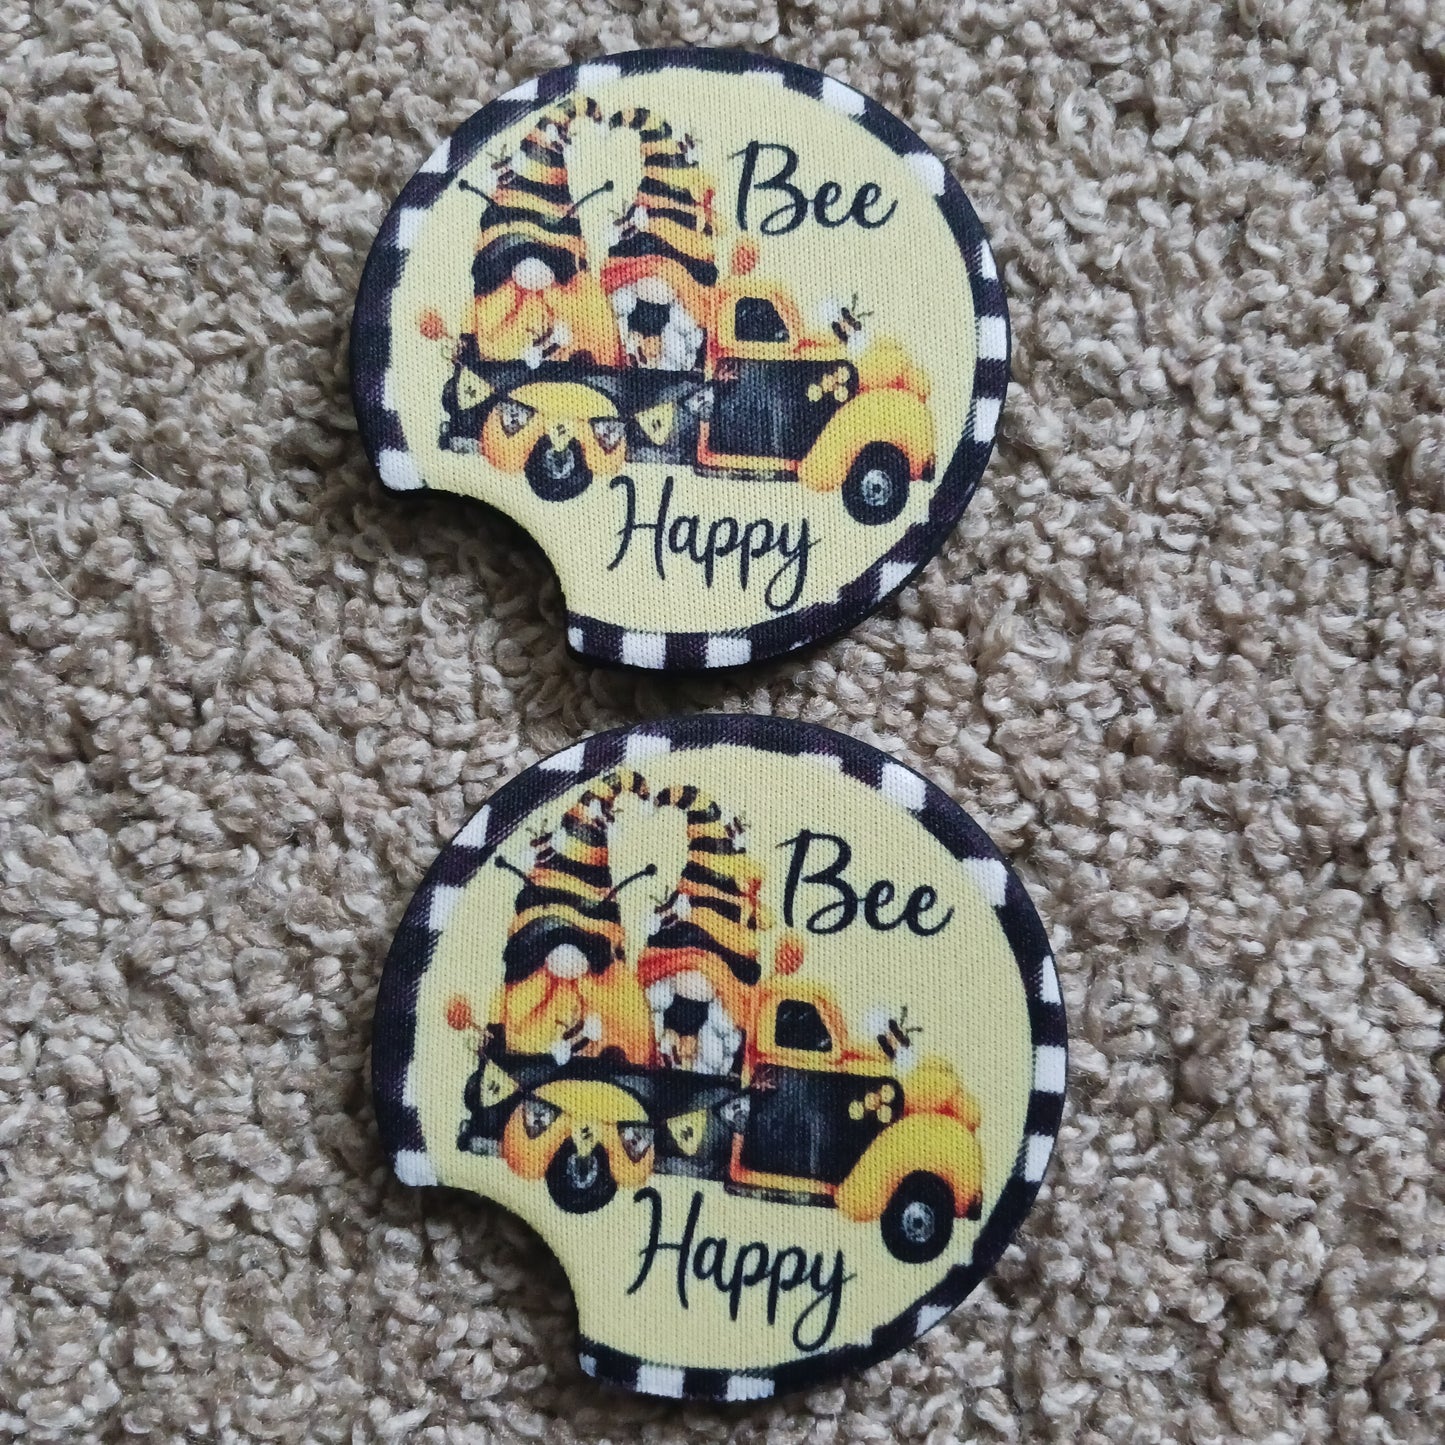 Bee happy gnome car coasters